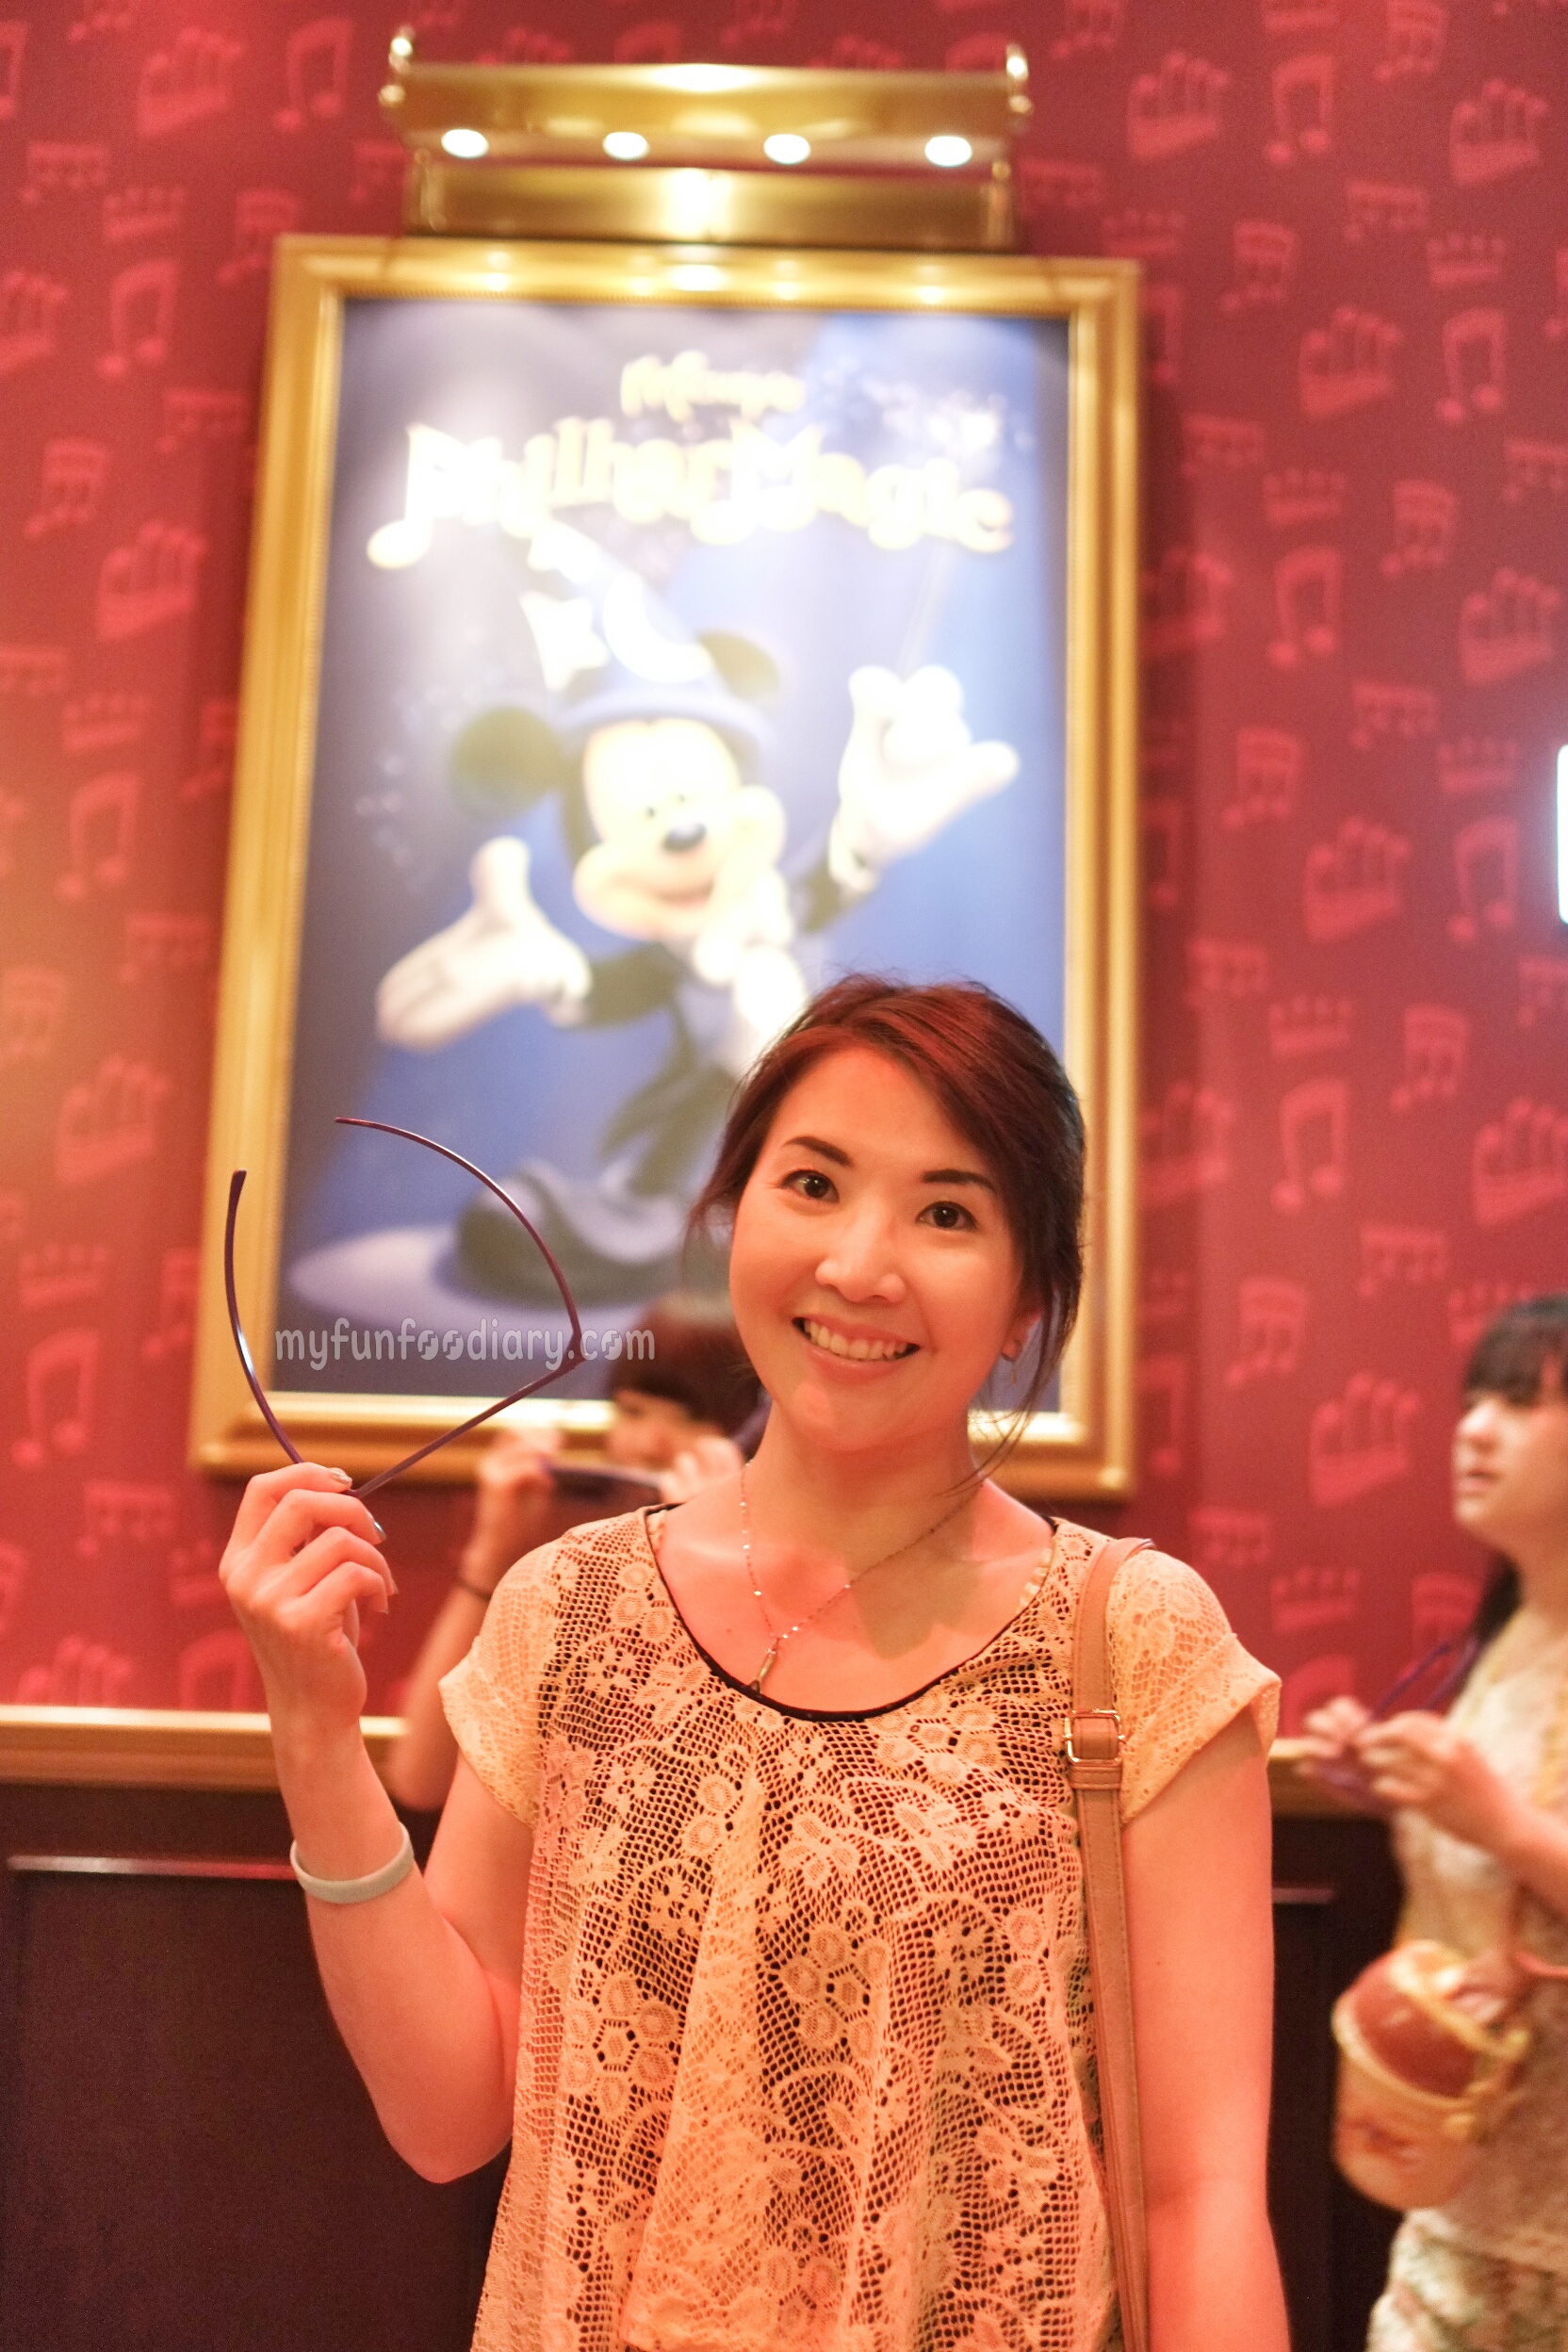 Mickeys Philarmagic at Tokyo Disneyland by Myfunfoodiary